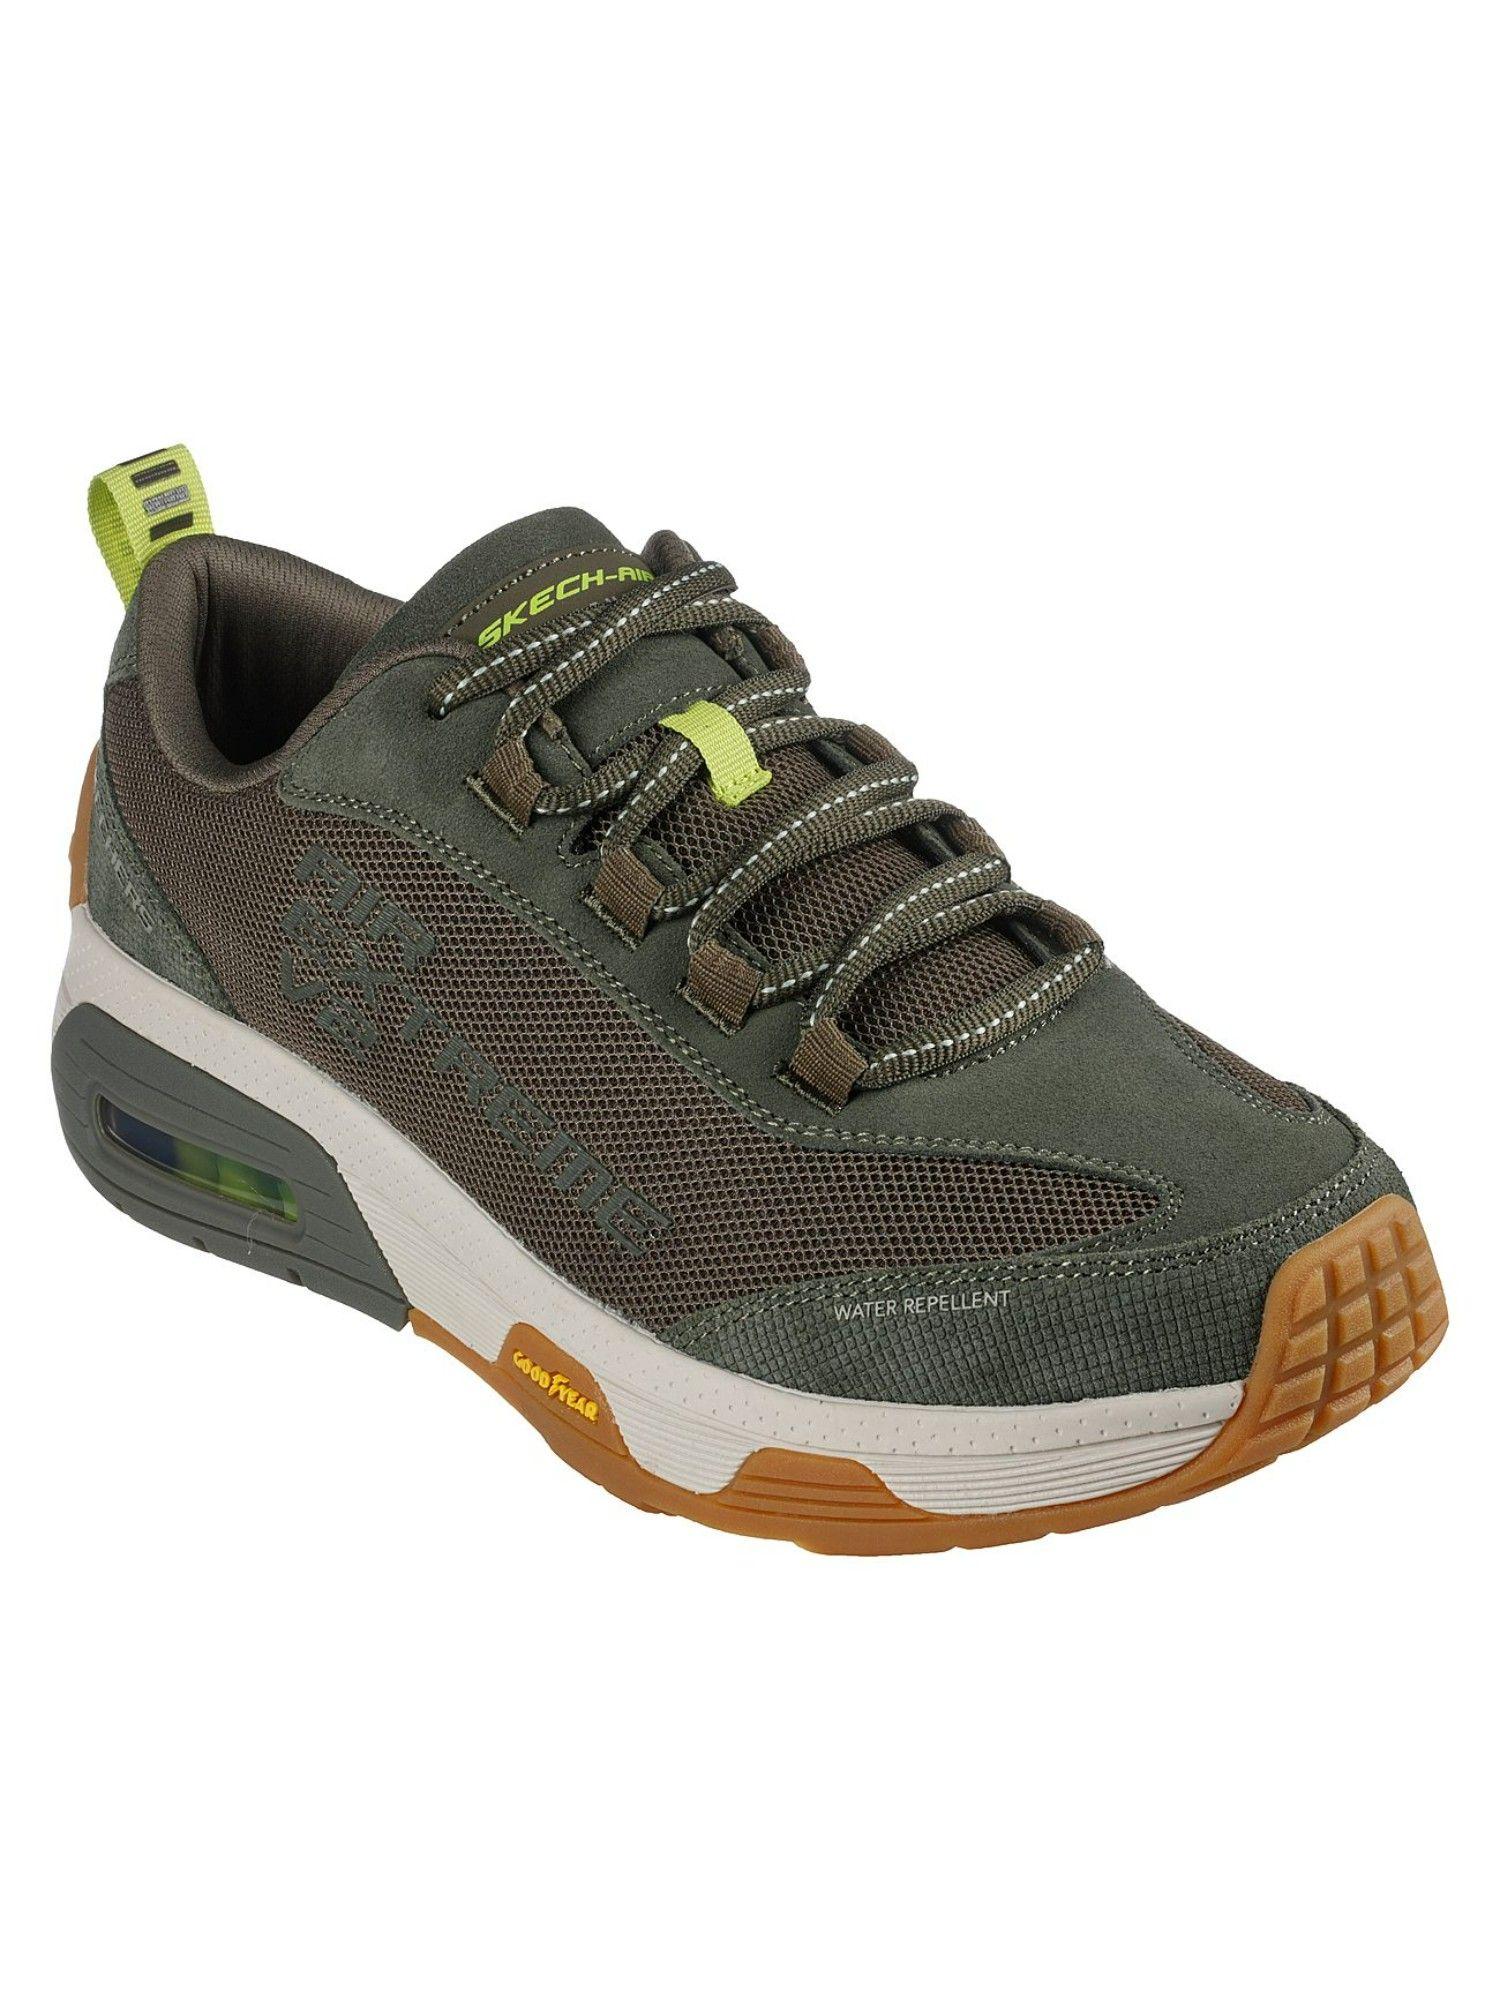 skech-air extreme v2 - brazen green sneakers